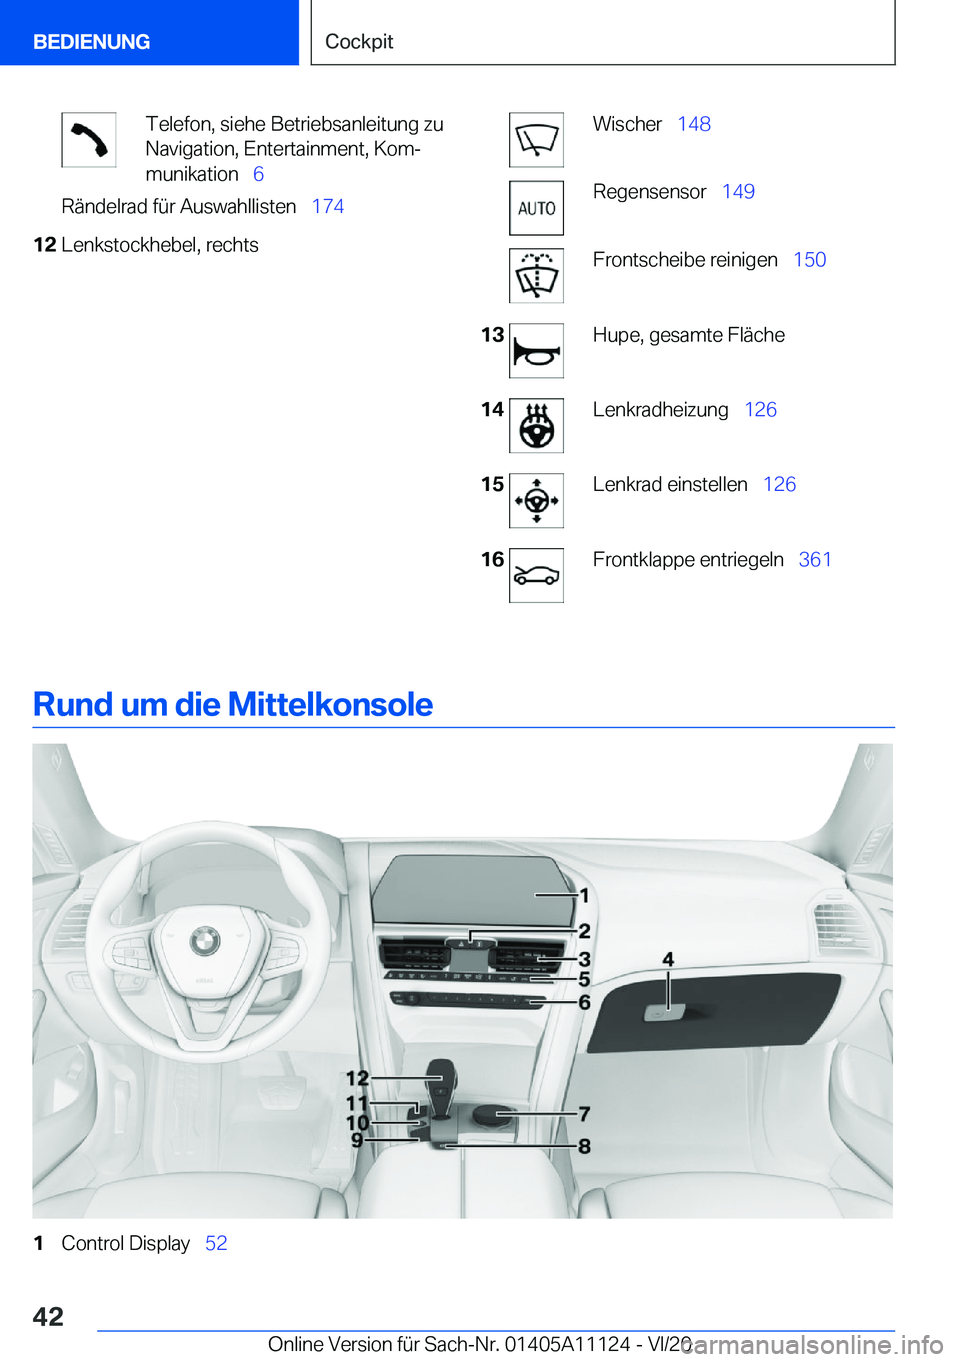 BMW 8 SERIES COUPE 2021  Betriebsanleitungen (in German) �T�e�l�e�f�o�n�,��s�i�e�h�e��B�e�t�r�i�e�b�s�a�n�l�e�i�t�u�n�g��z�u
�N�a�v�i�g�a�t�i�o�n�,��E�n�t�e�r�t�a�i�n�m�e�n�t�,��K�o�mj
�m�u�n�i�k�a�t�i�o�n\_ �6�R�